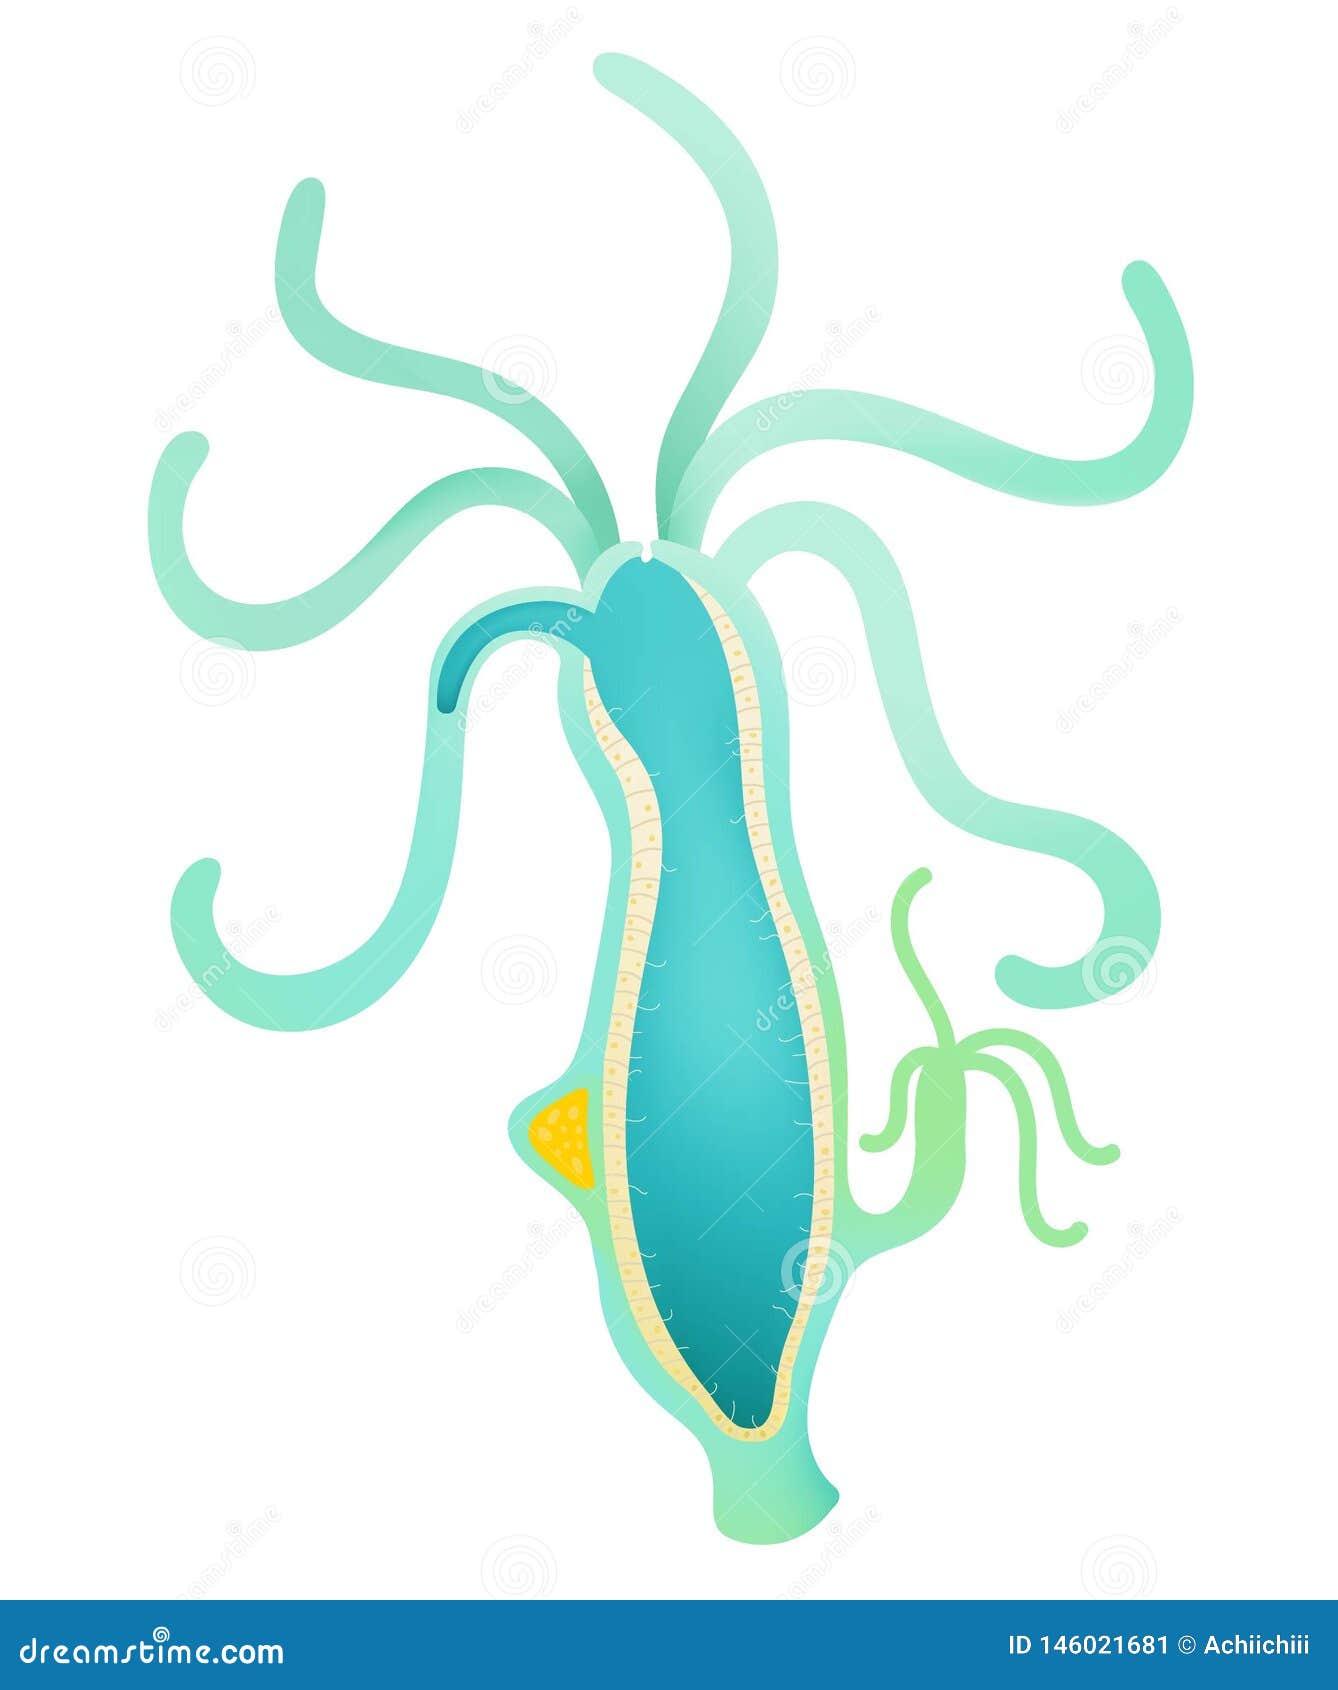 Hydra of Anatomy stock illustration. Illustration of diagram - 146021681